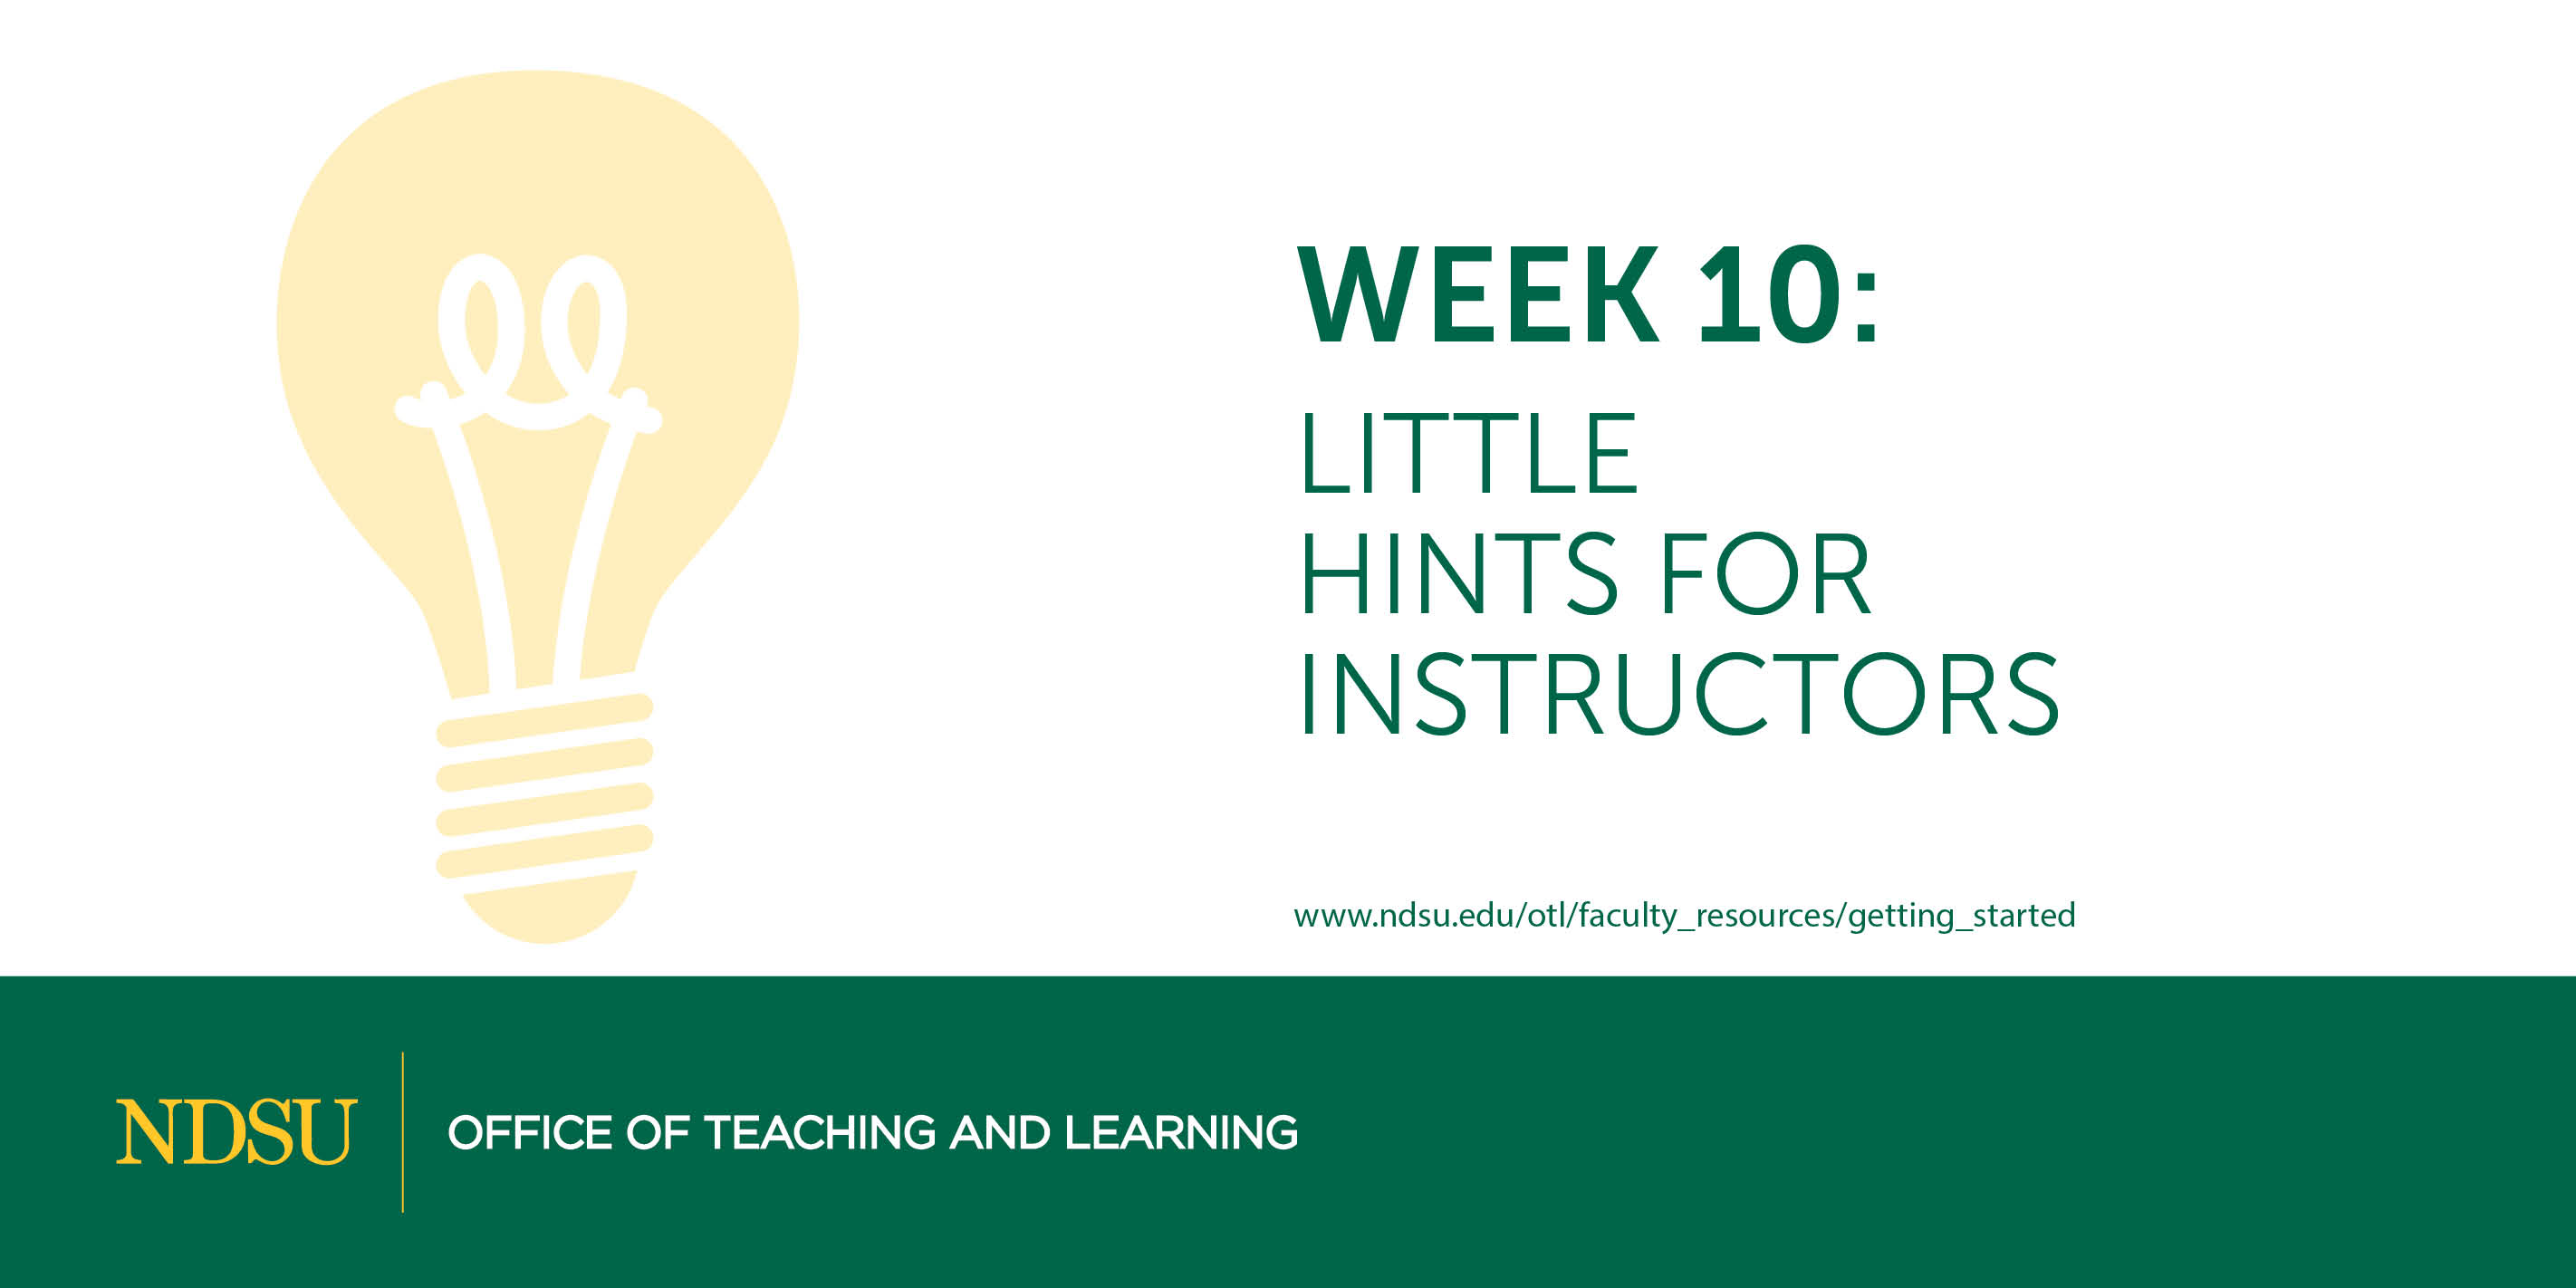 Week 10 Little Hints for Instructors